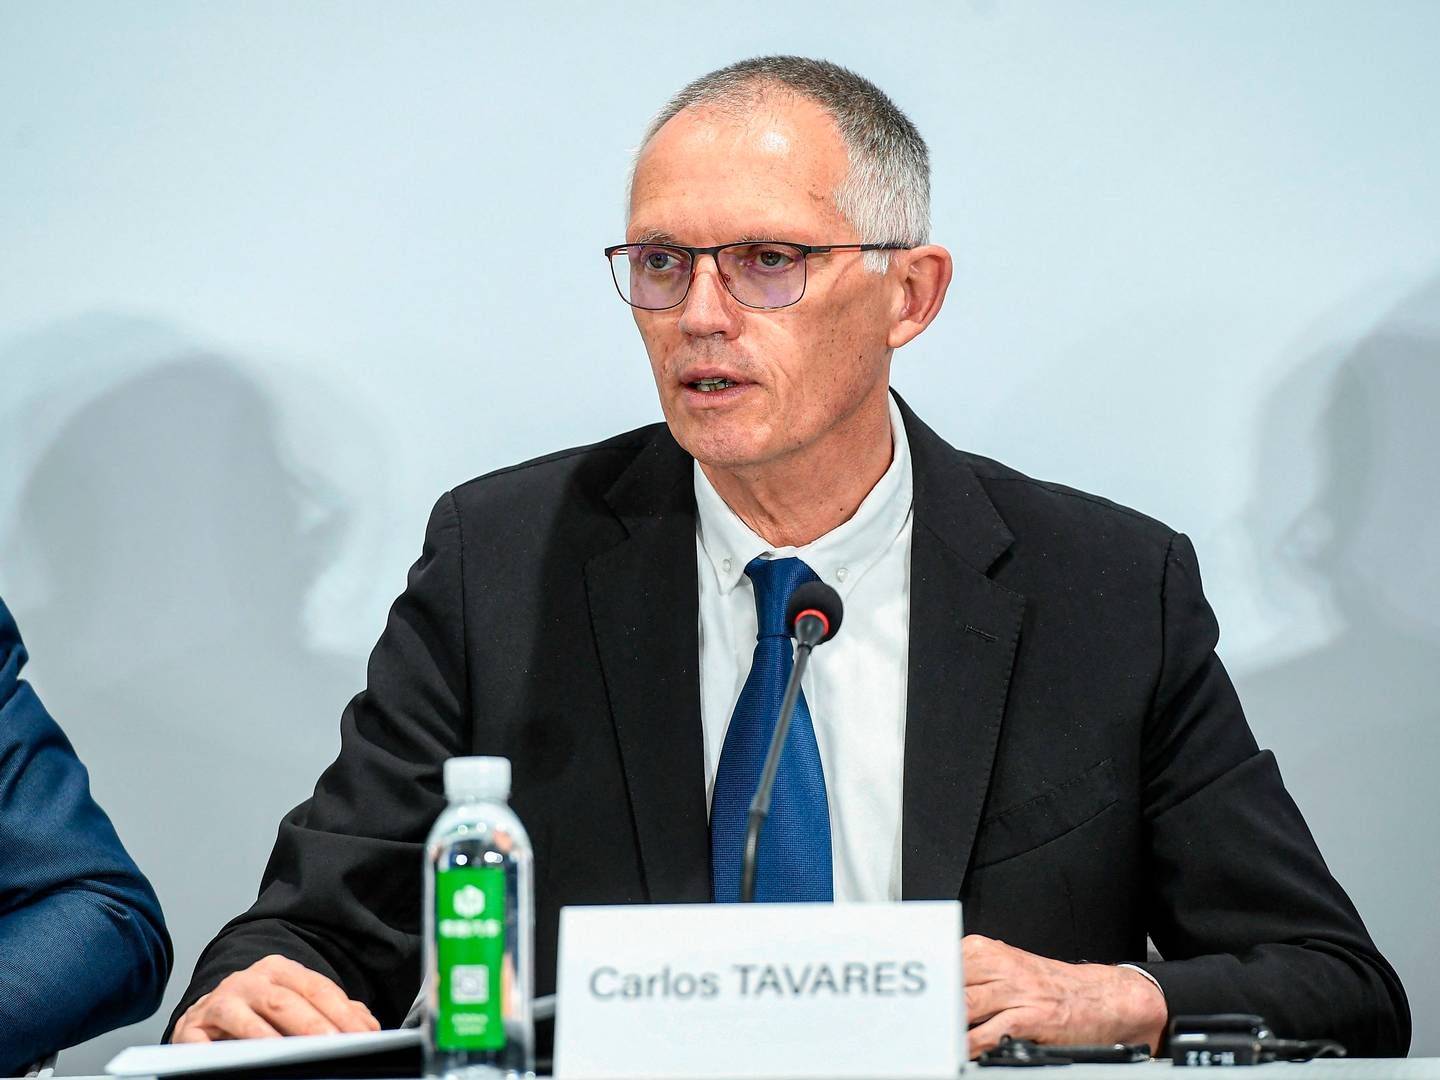 Carlos Tavares, adm. direktør for Stellantis. | Foto: AFP/Ritzau Scanpix